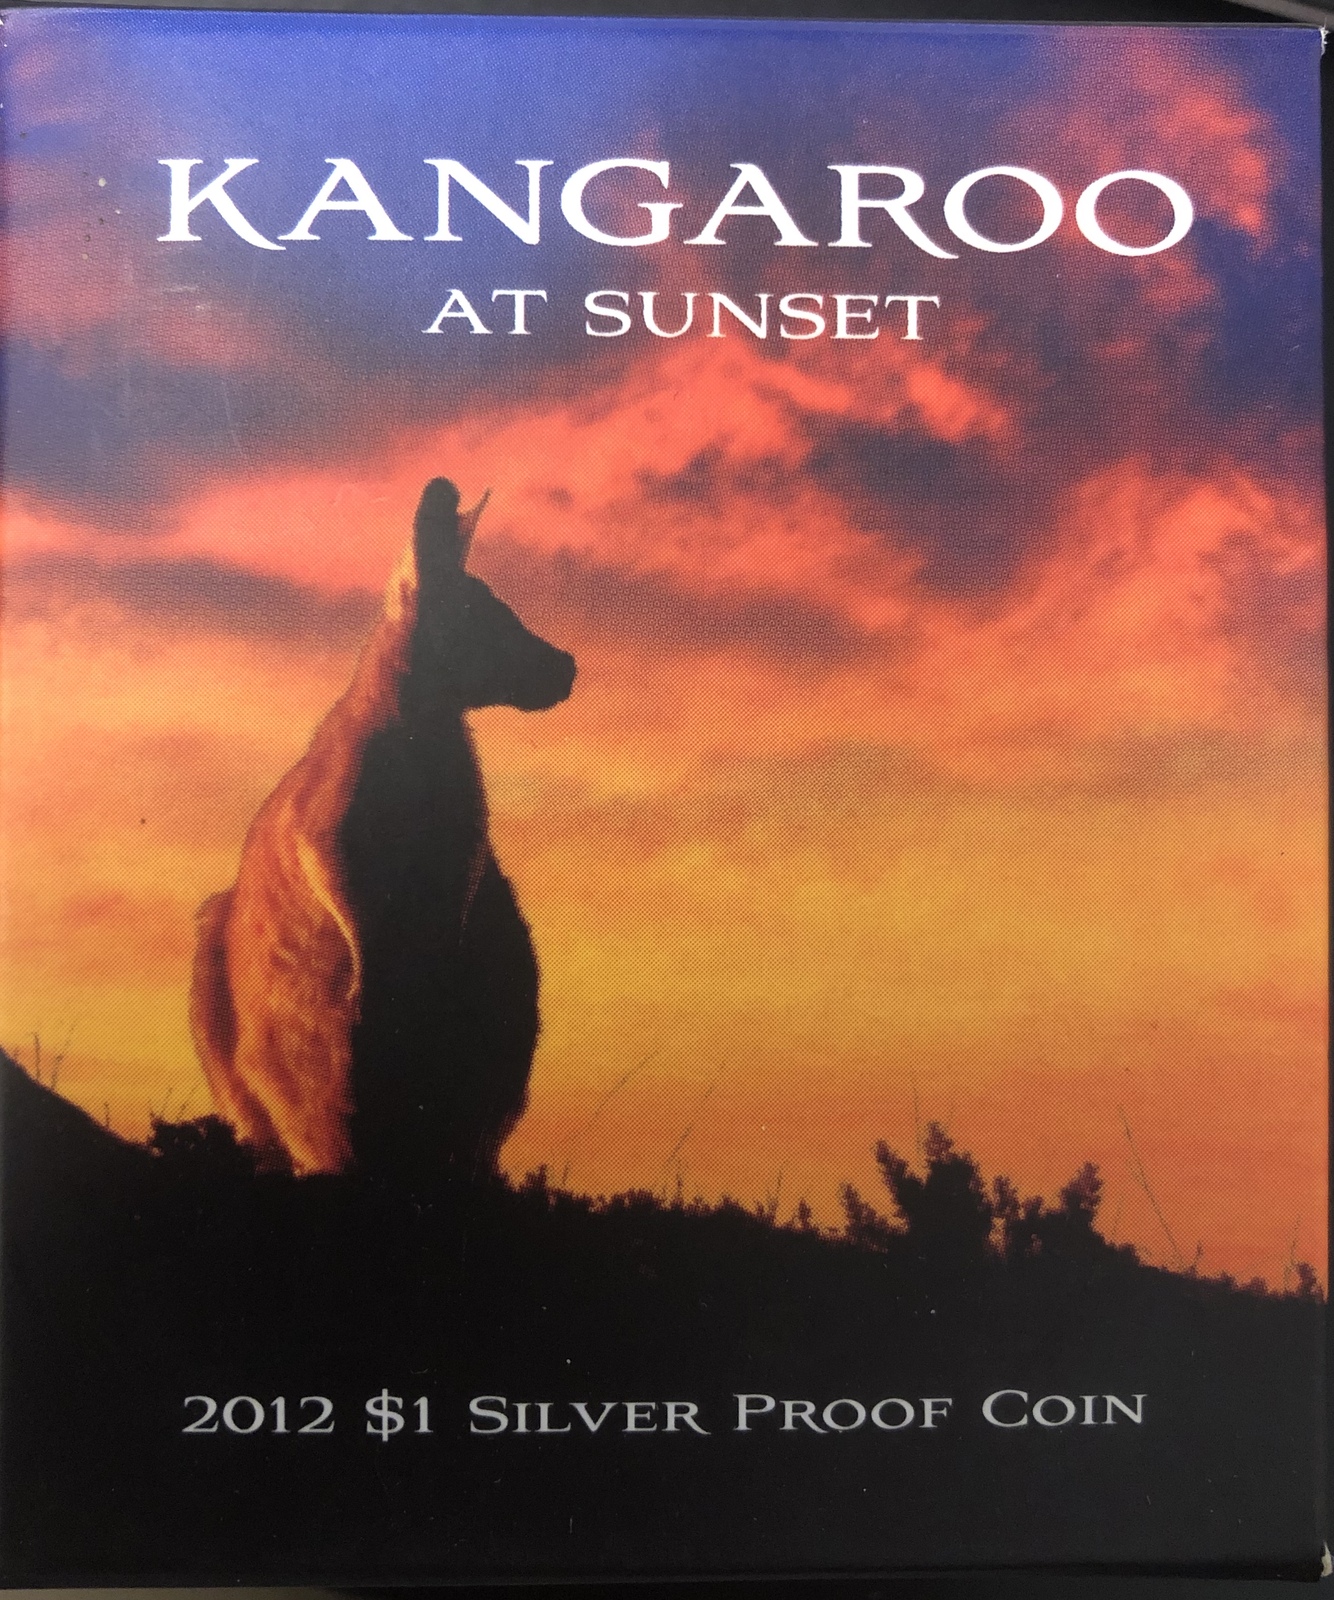 2012 Silver $1 Proof Kangaroo at Sunset product image